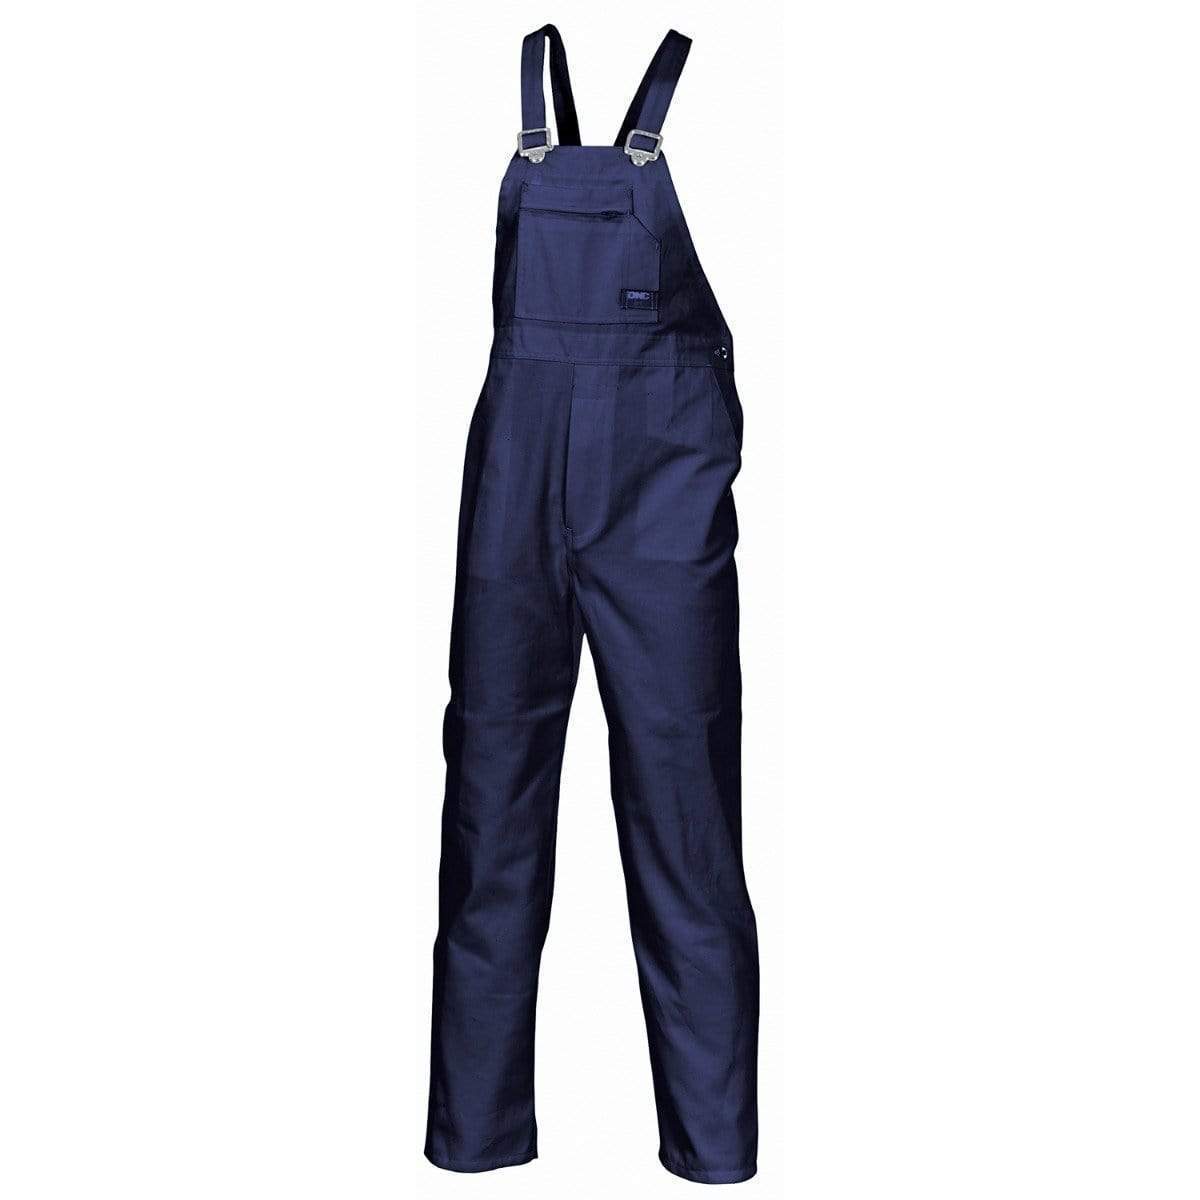 Dnc Workwear Cotton Drill Bib And Brace Overall - 3111 Work Wear DNC Workwear Navy 77R 